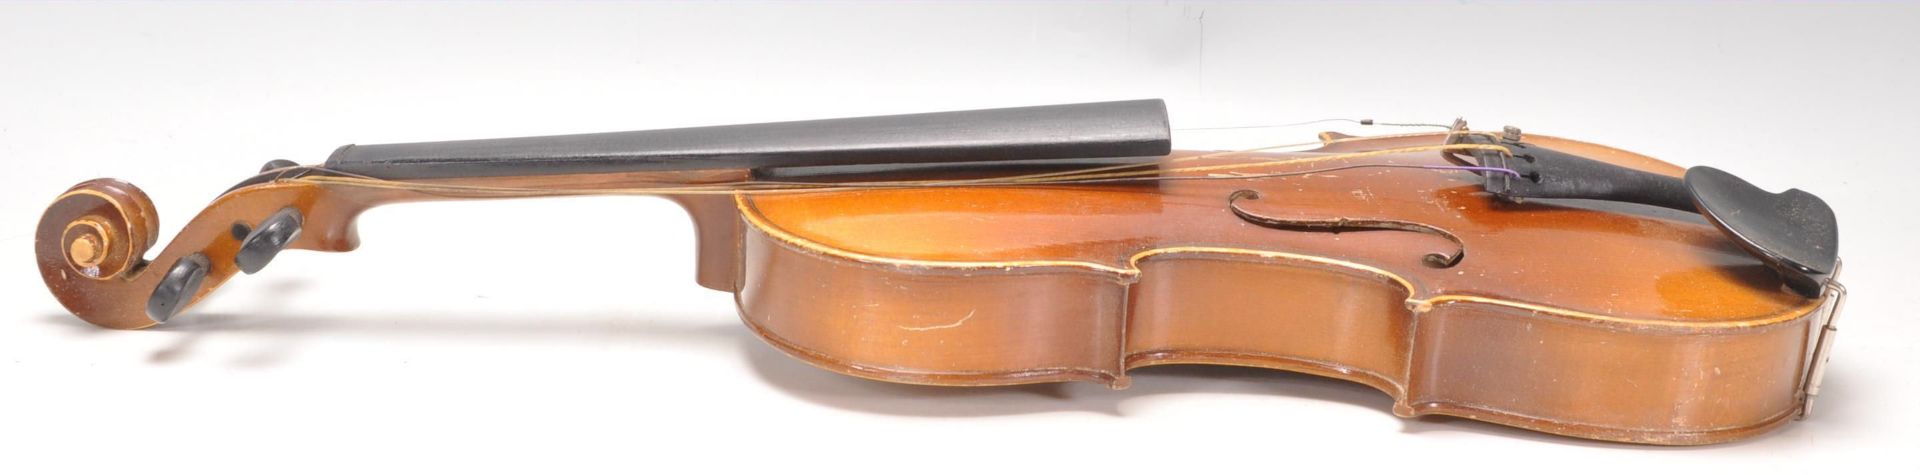 An early 20th Century Czechoslovakian Antonius Stradivarius made violin having a hollow body with - Bild 4 aus 9